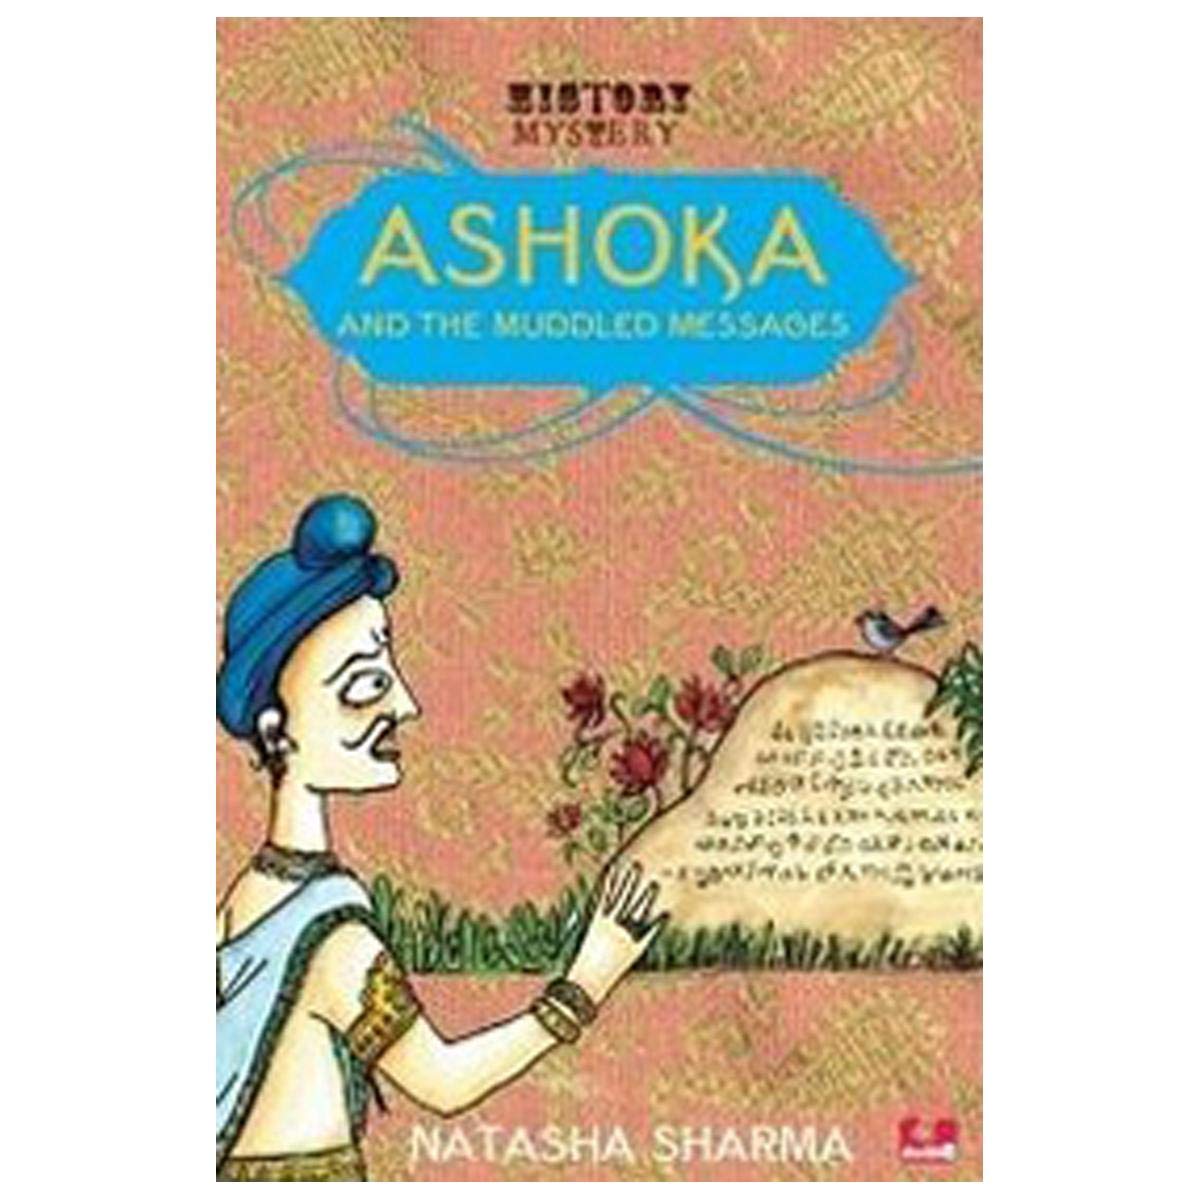 Ashoka and The Muddled Messages